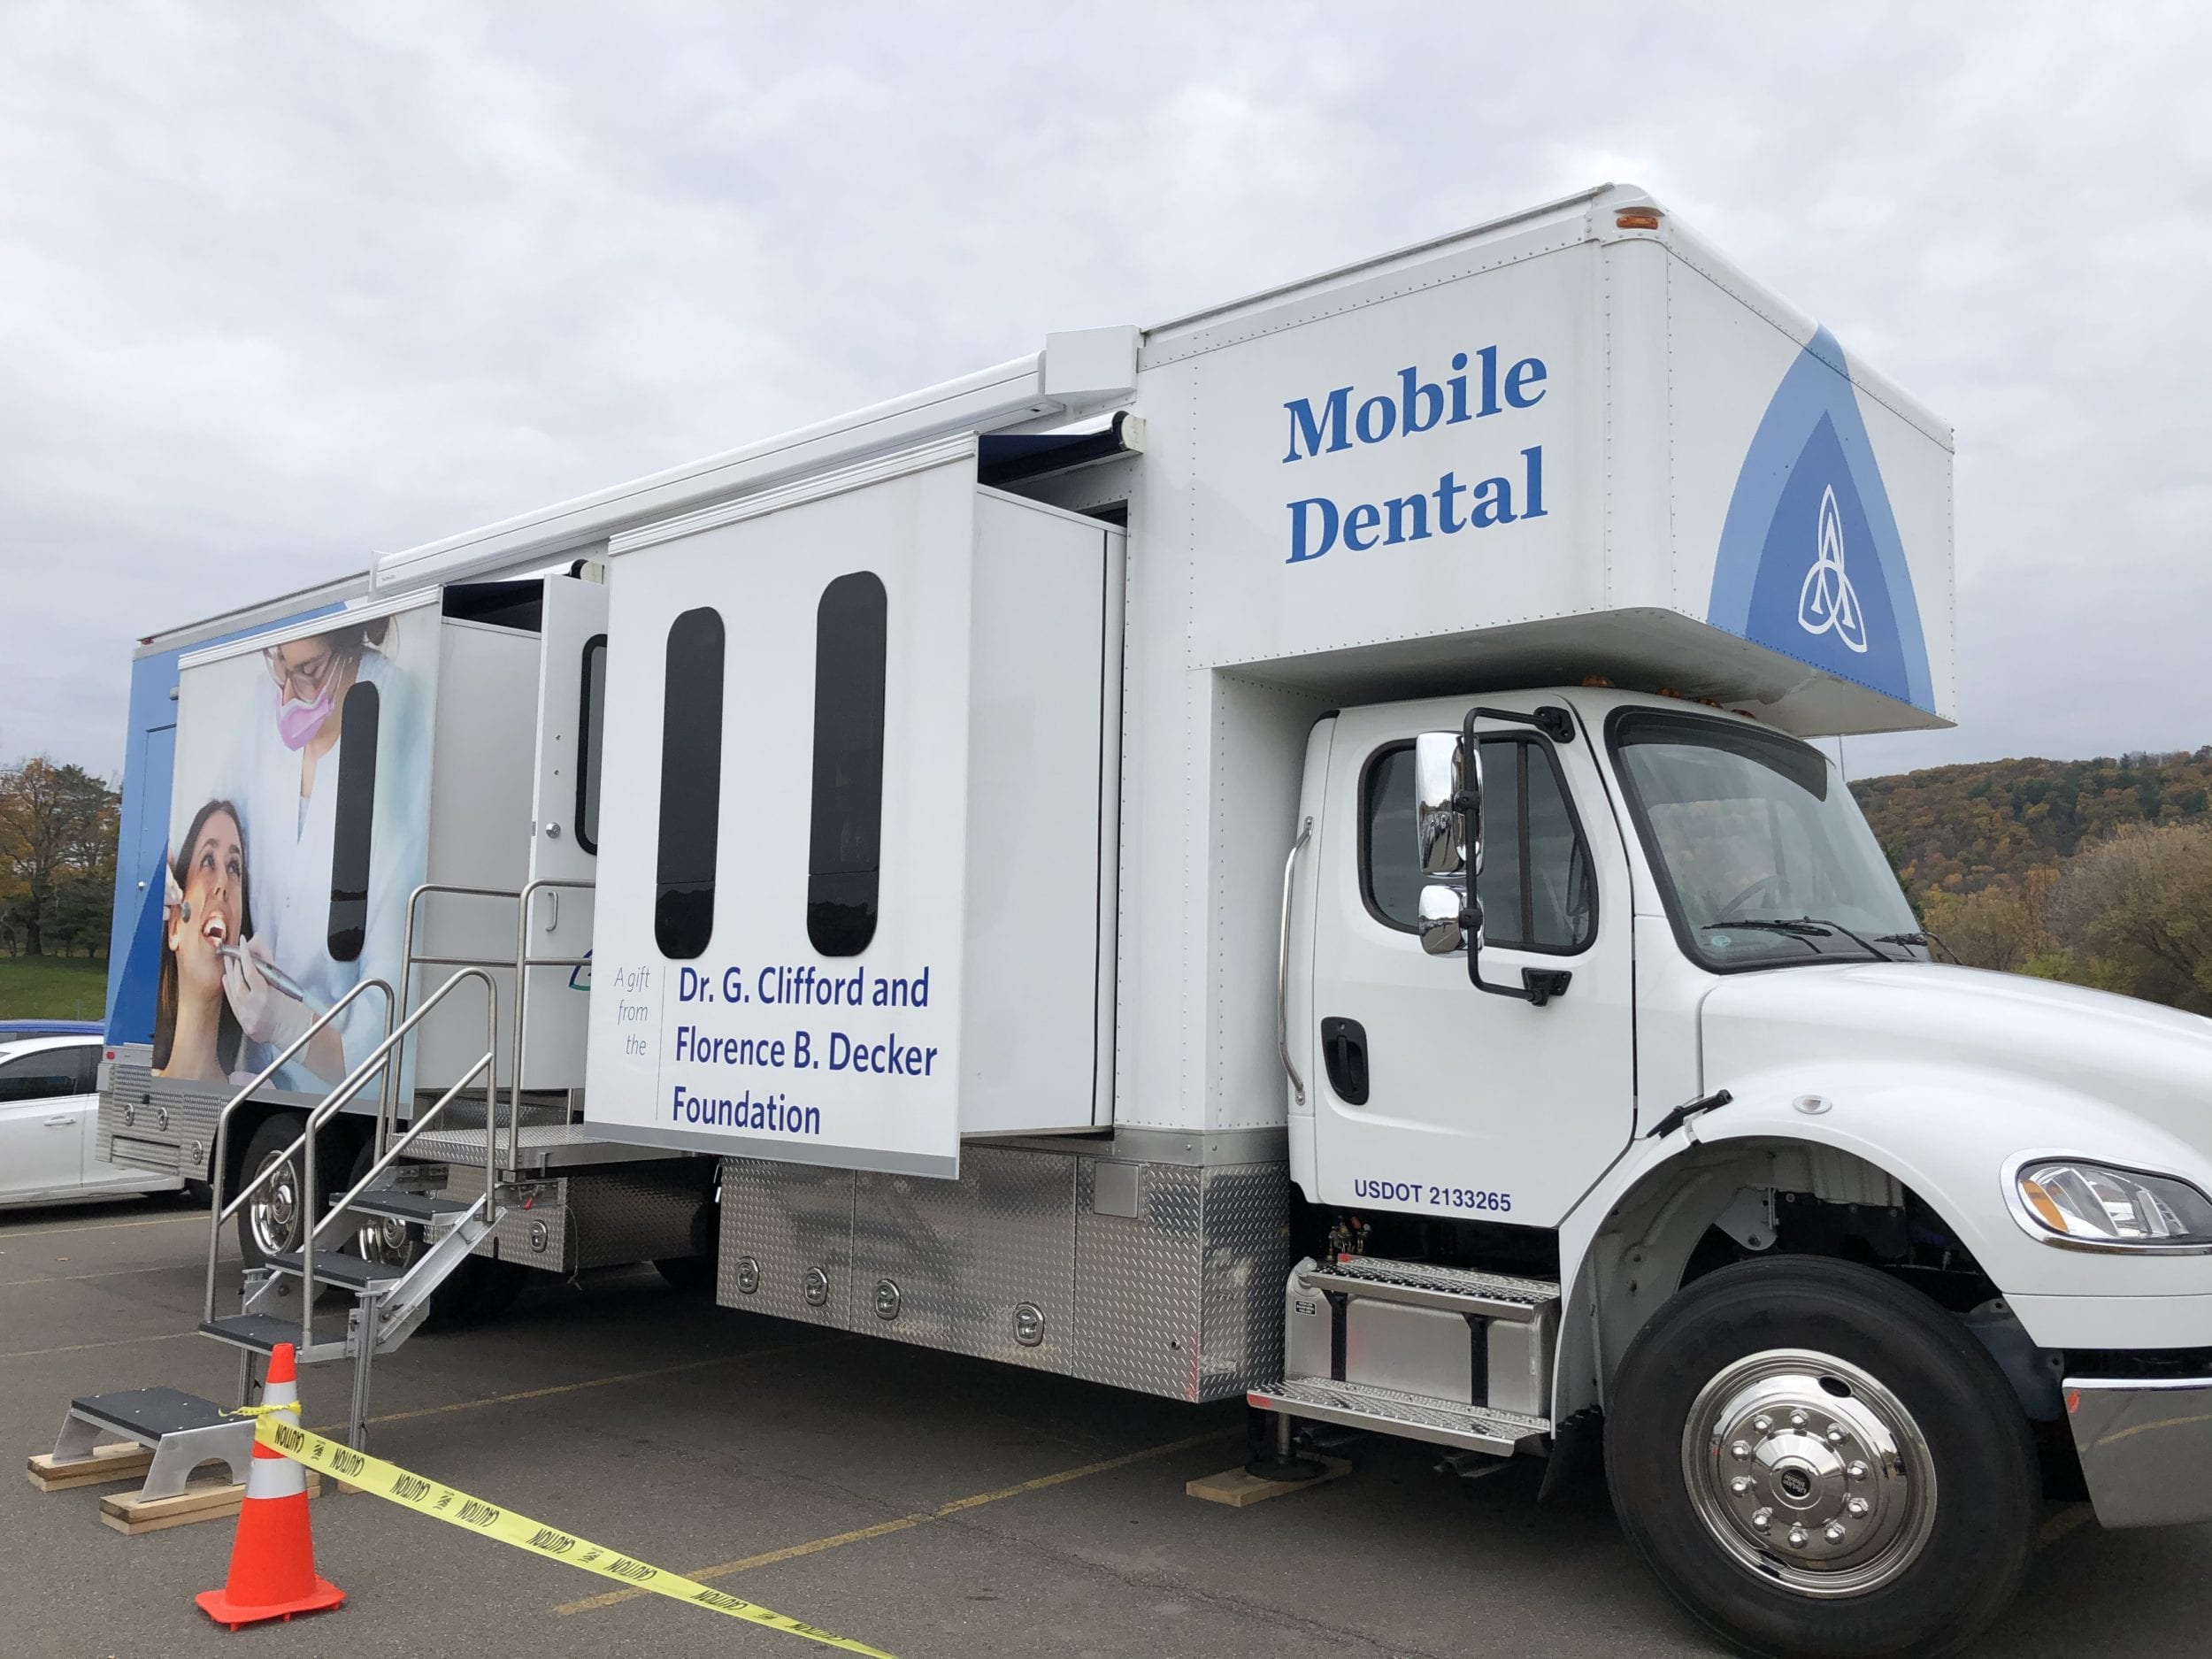 The Lourdes Mobile Dental van